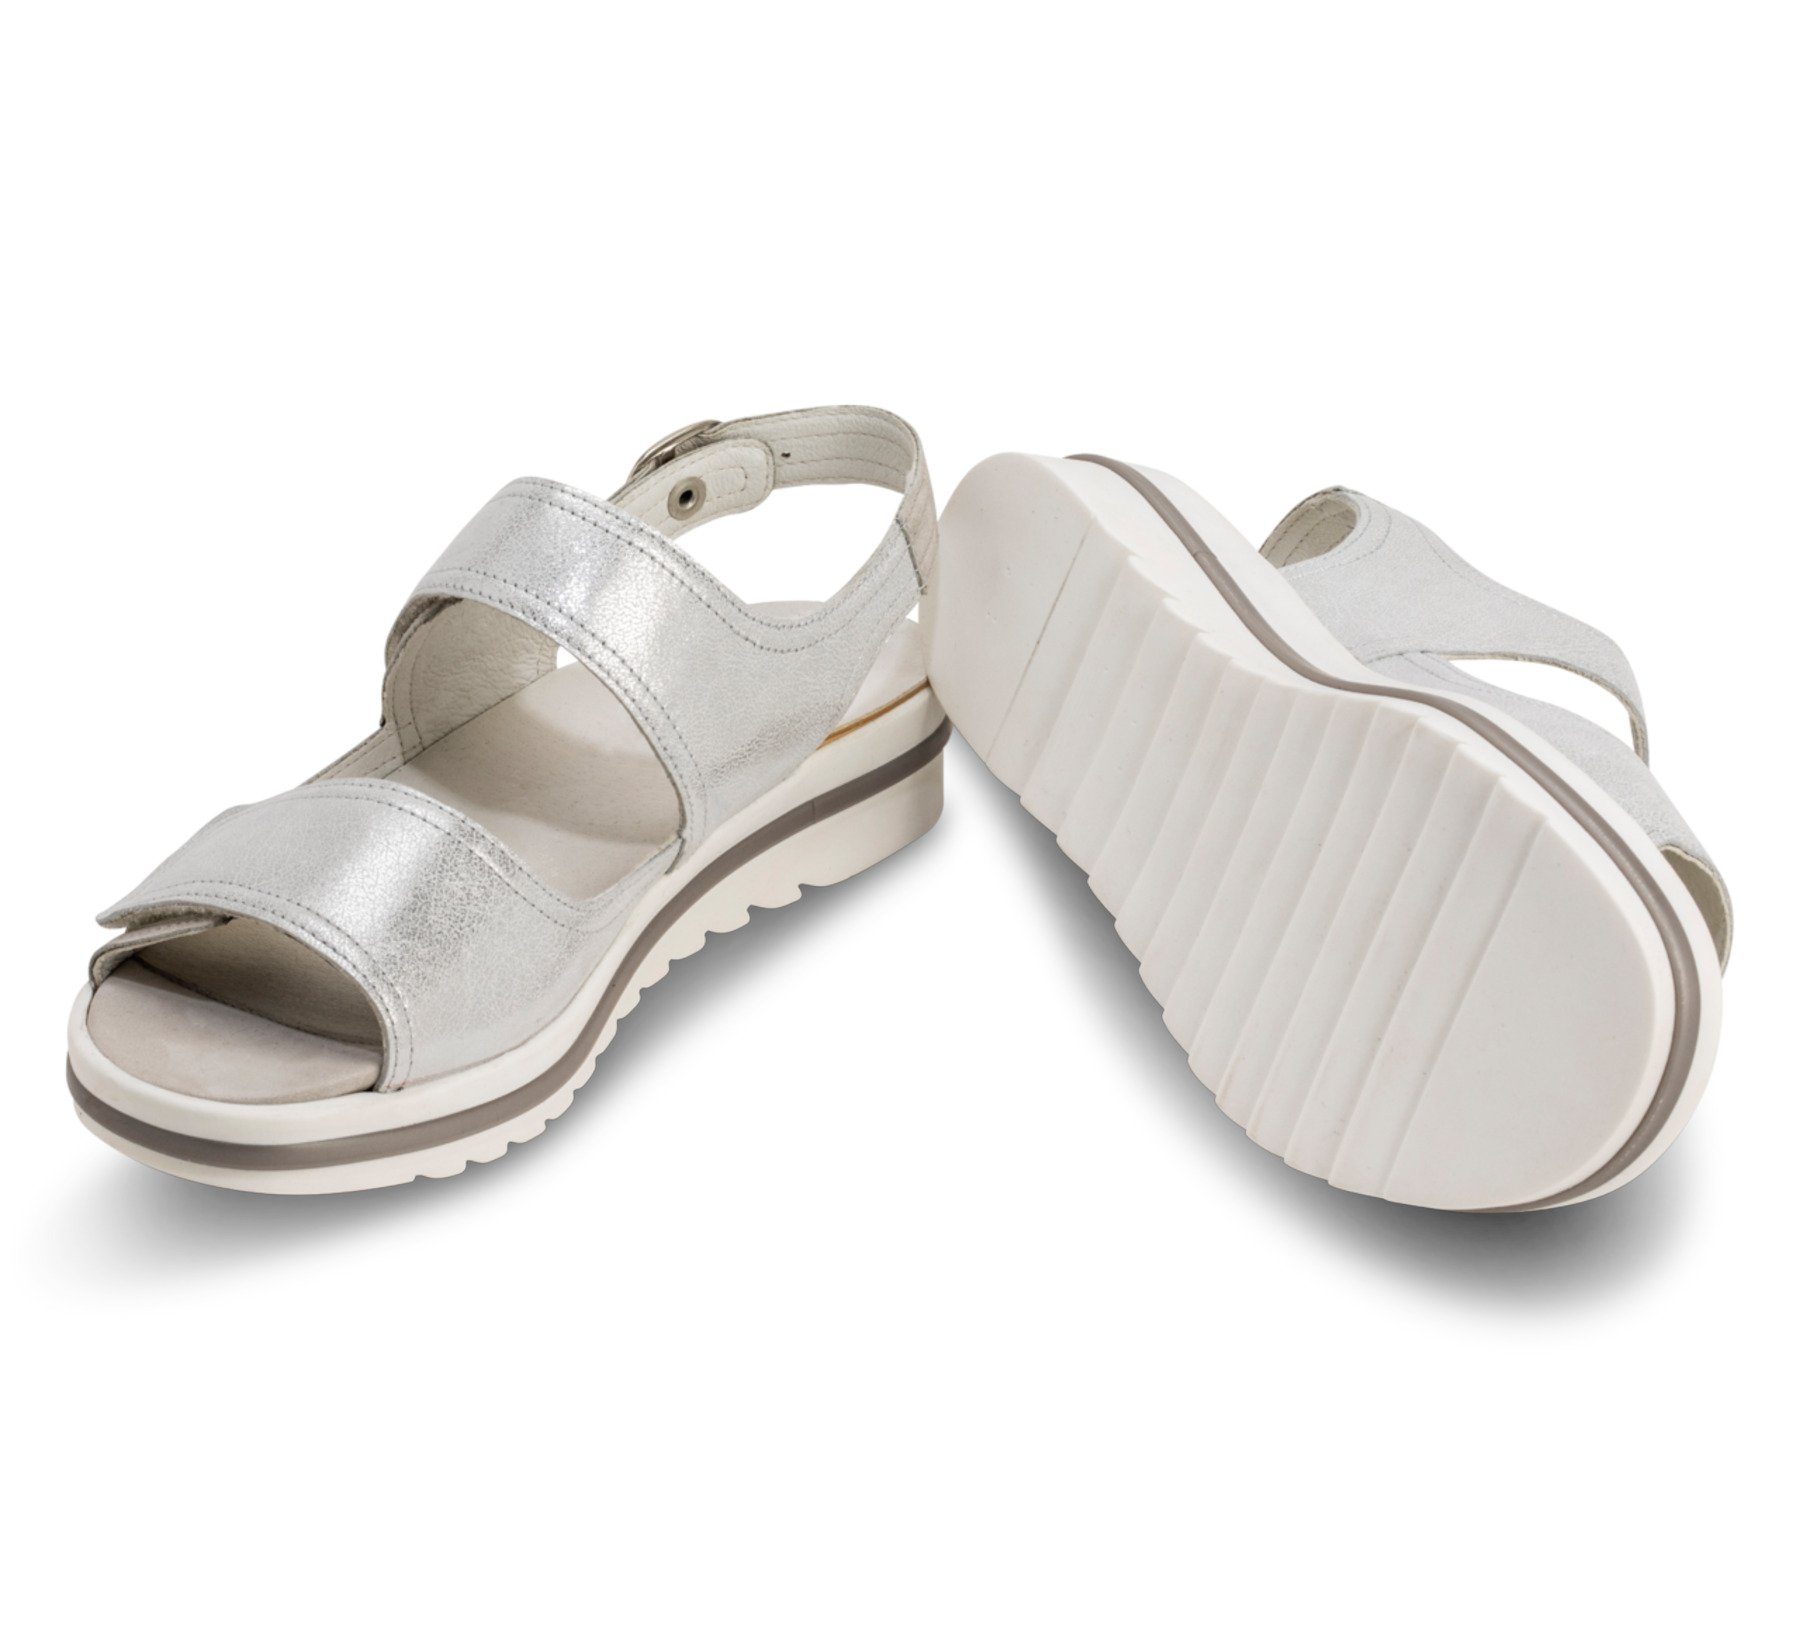 Damenschuhe Sandale silber Sandale Leder echt vitaform